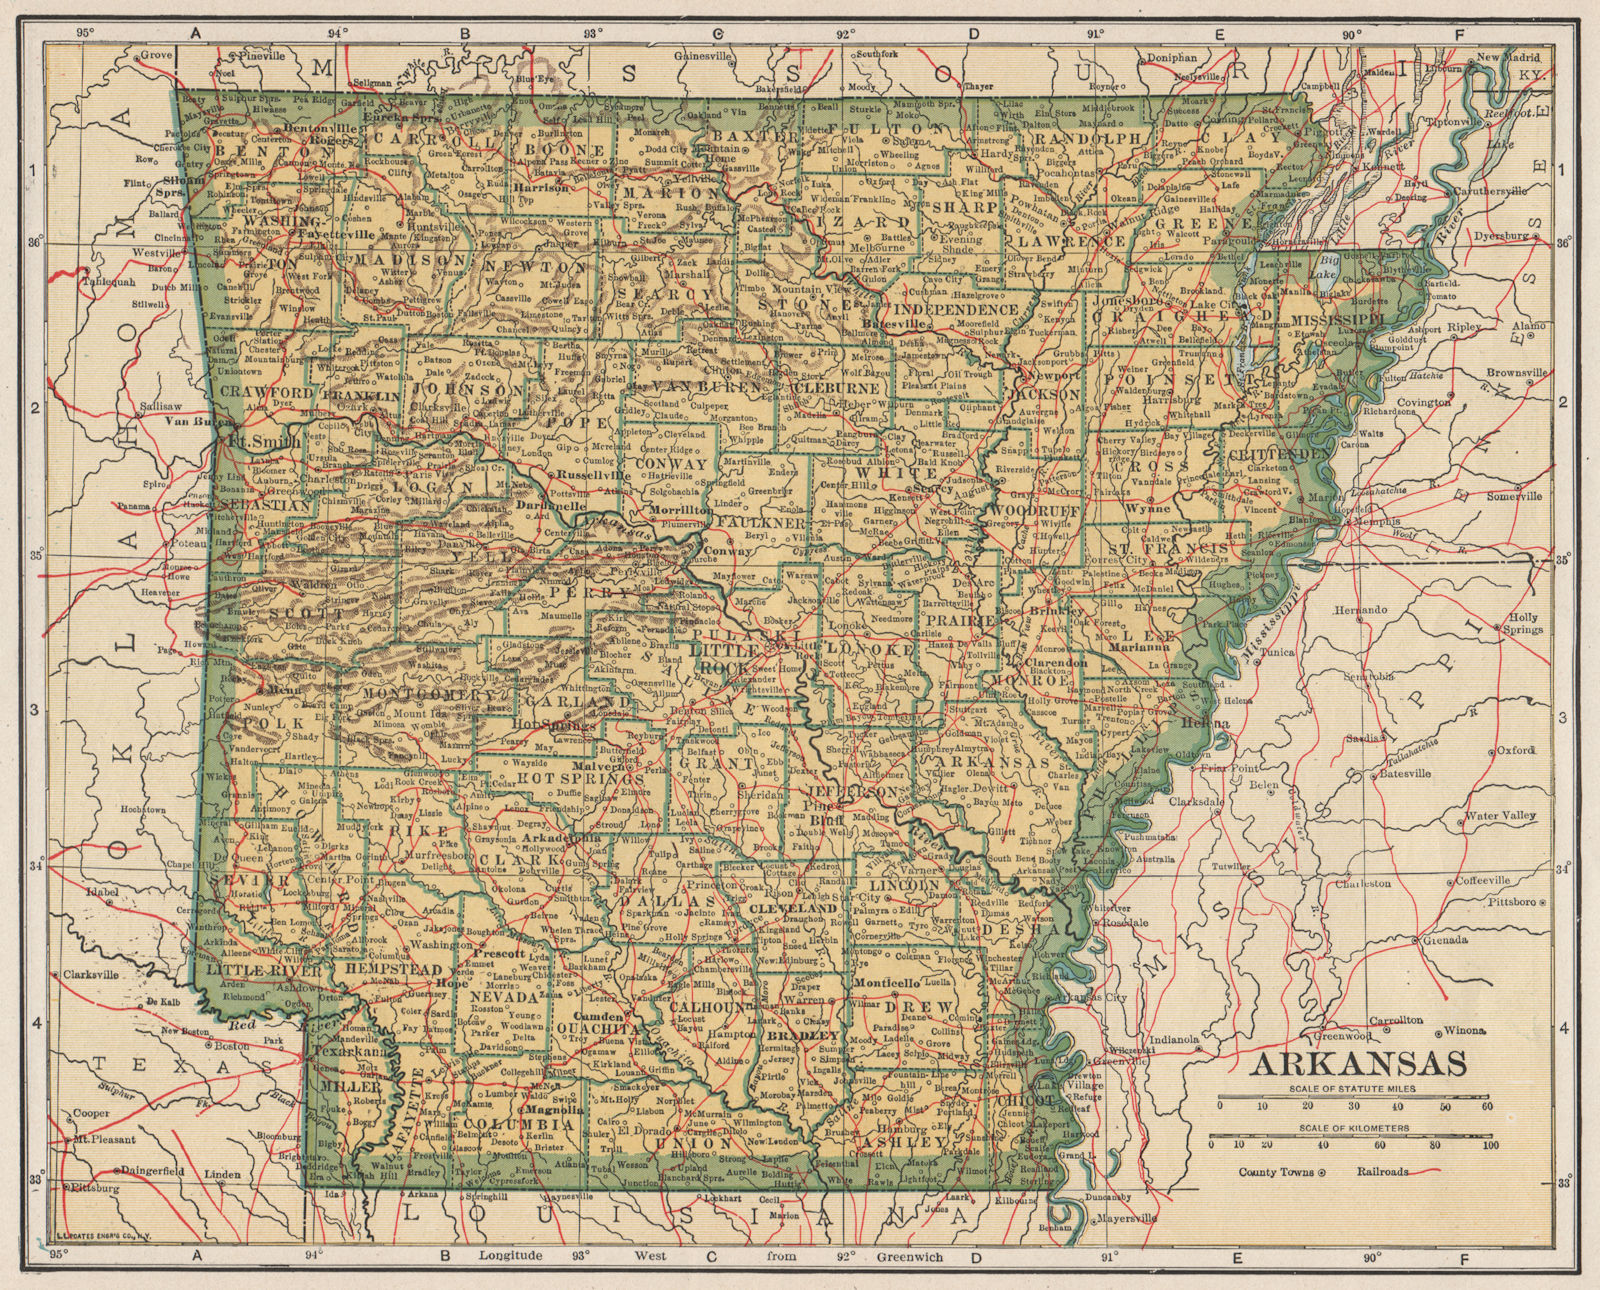 Arkansas state map showing railroads. POATES 1925 old vintage plan chart